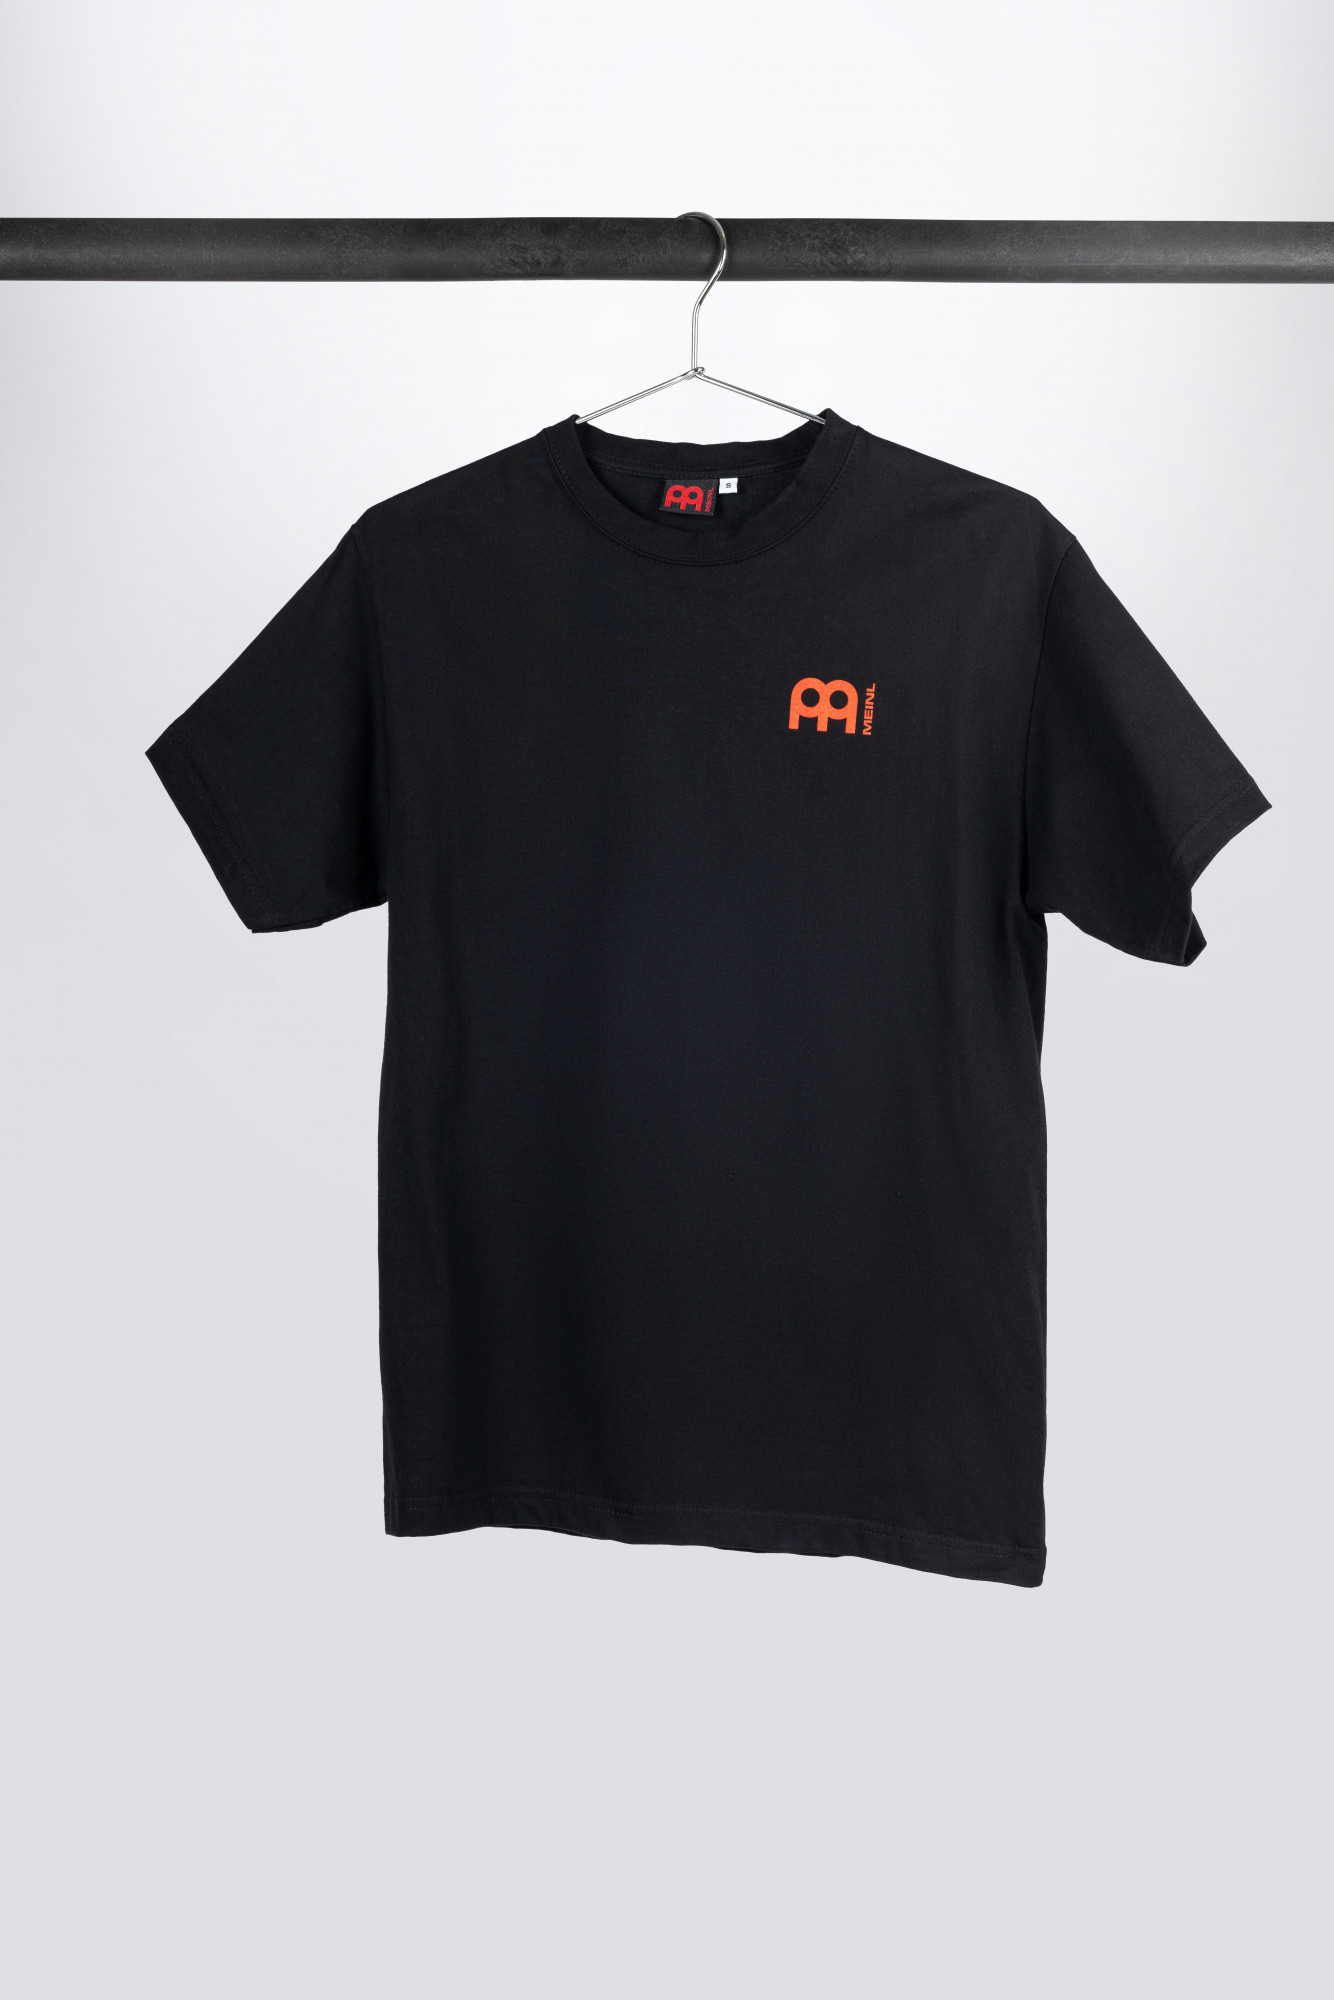 Pedigree look combat Black Meinl t-shirt with imprinted red Meinl logo on left chest (M42) |  T-Shirts | Merchandise | Meinl Cymbals | MEINL Shop